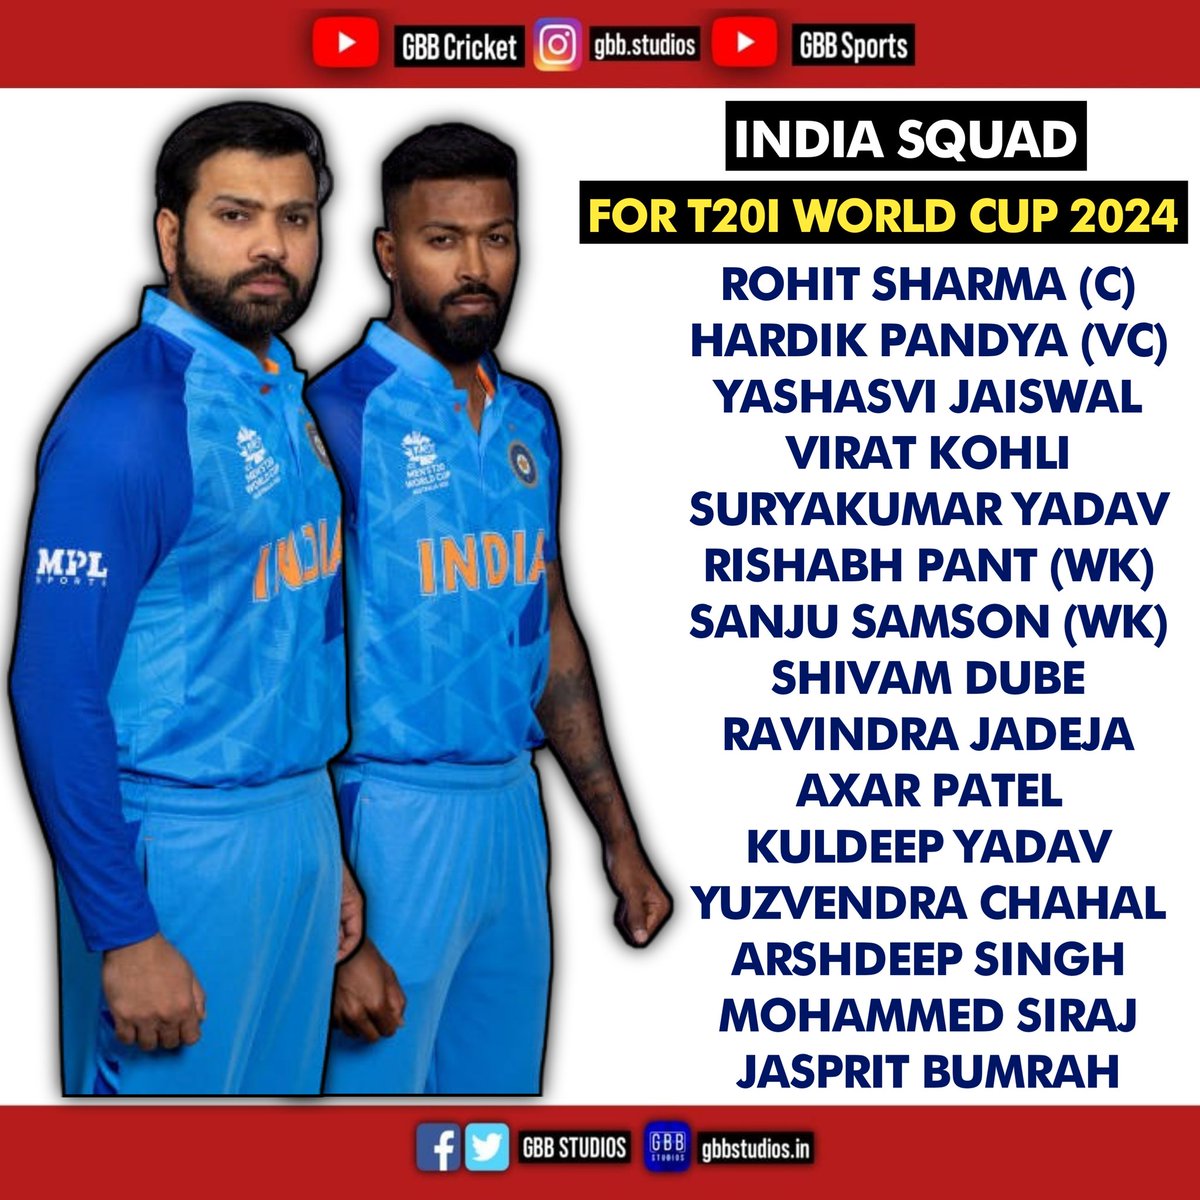 Indian team squad for T20 World Cup 2024!

#TeamIndia #T20WorldCup2024 #T20WorldCup24 #t20worldcup #RohitSharma𓃵 #HardikPandya #SanjuSamson #yuzvendrachahal #yashasvijaiswal #mohammedsiraj #rinkusingh #KLRahul